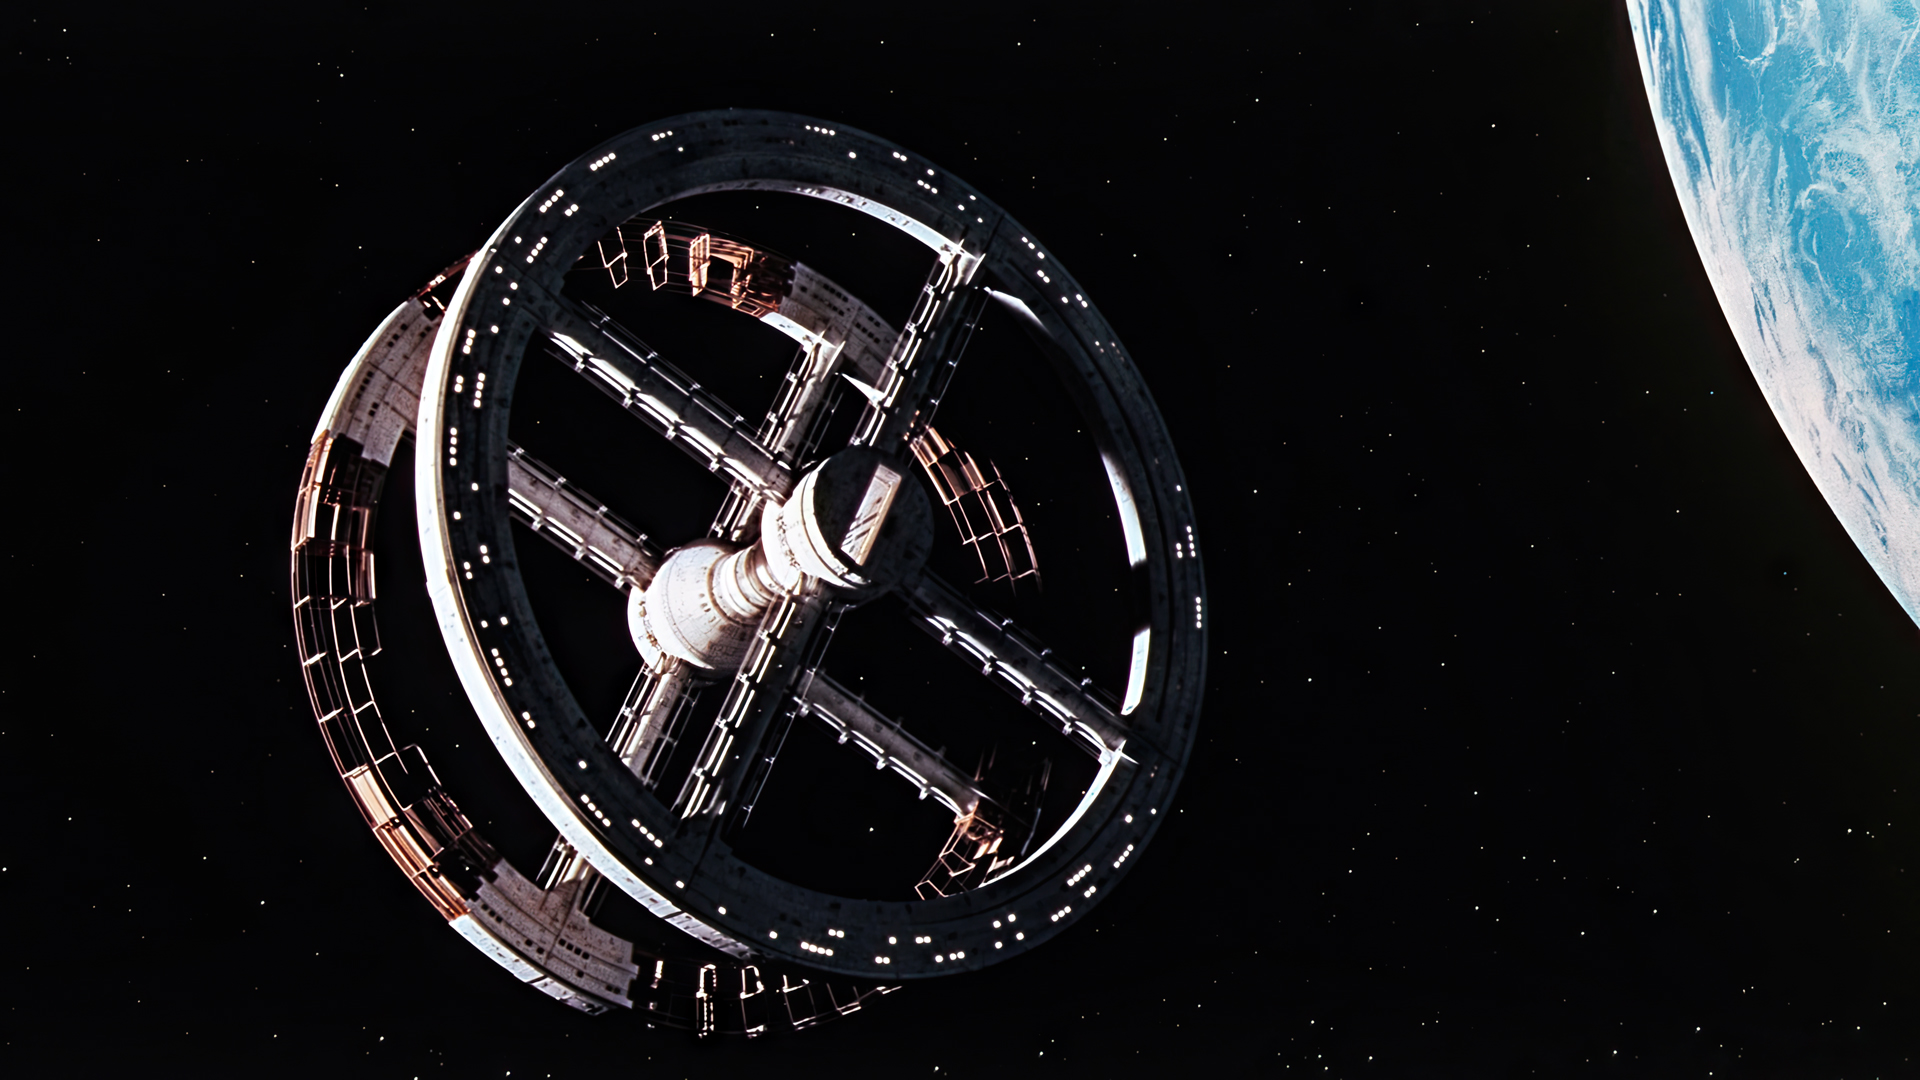 General 1920x1080 2001: A Space Odyssey Space Station V movies film stills spaceship planet stars space Stanley Kubrick